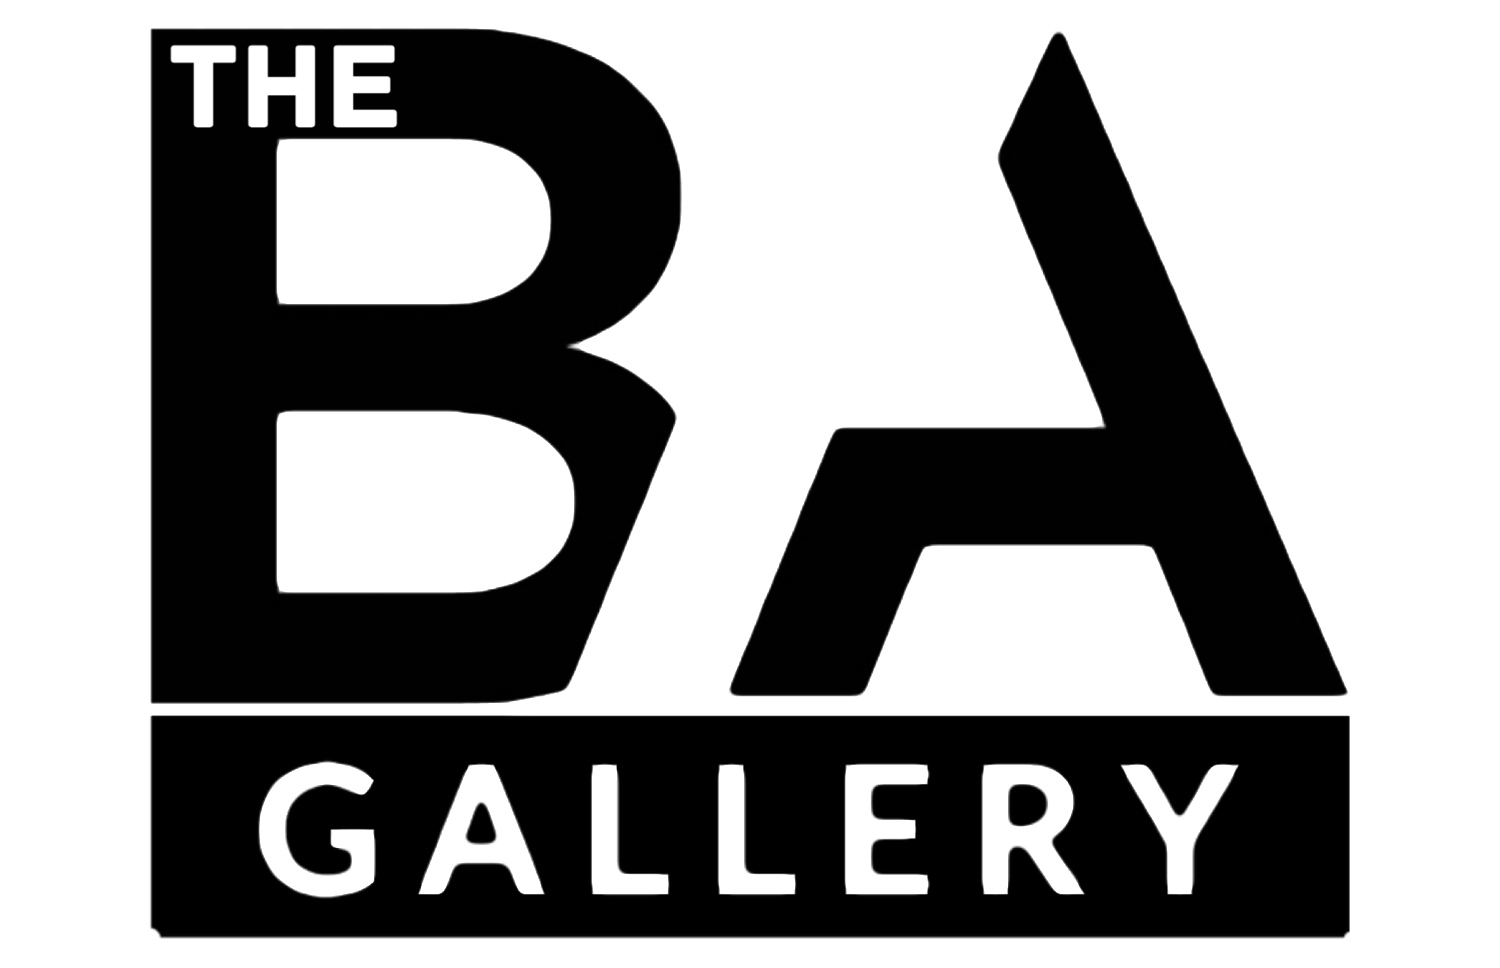 The Body Art Gallery